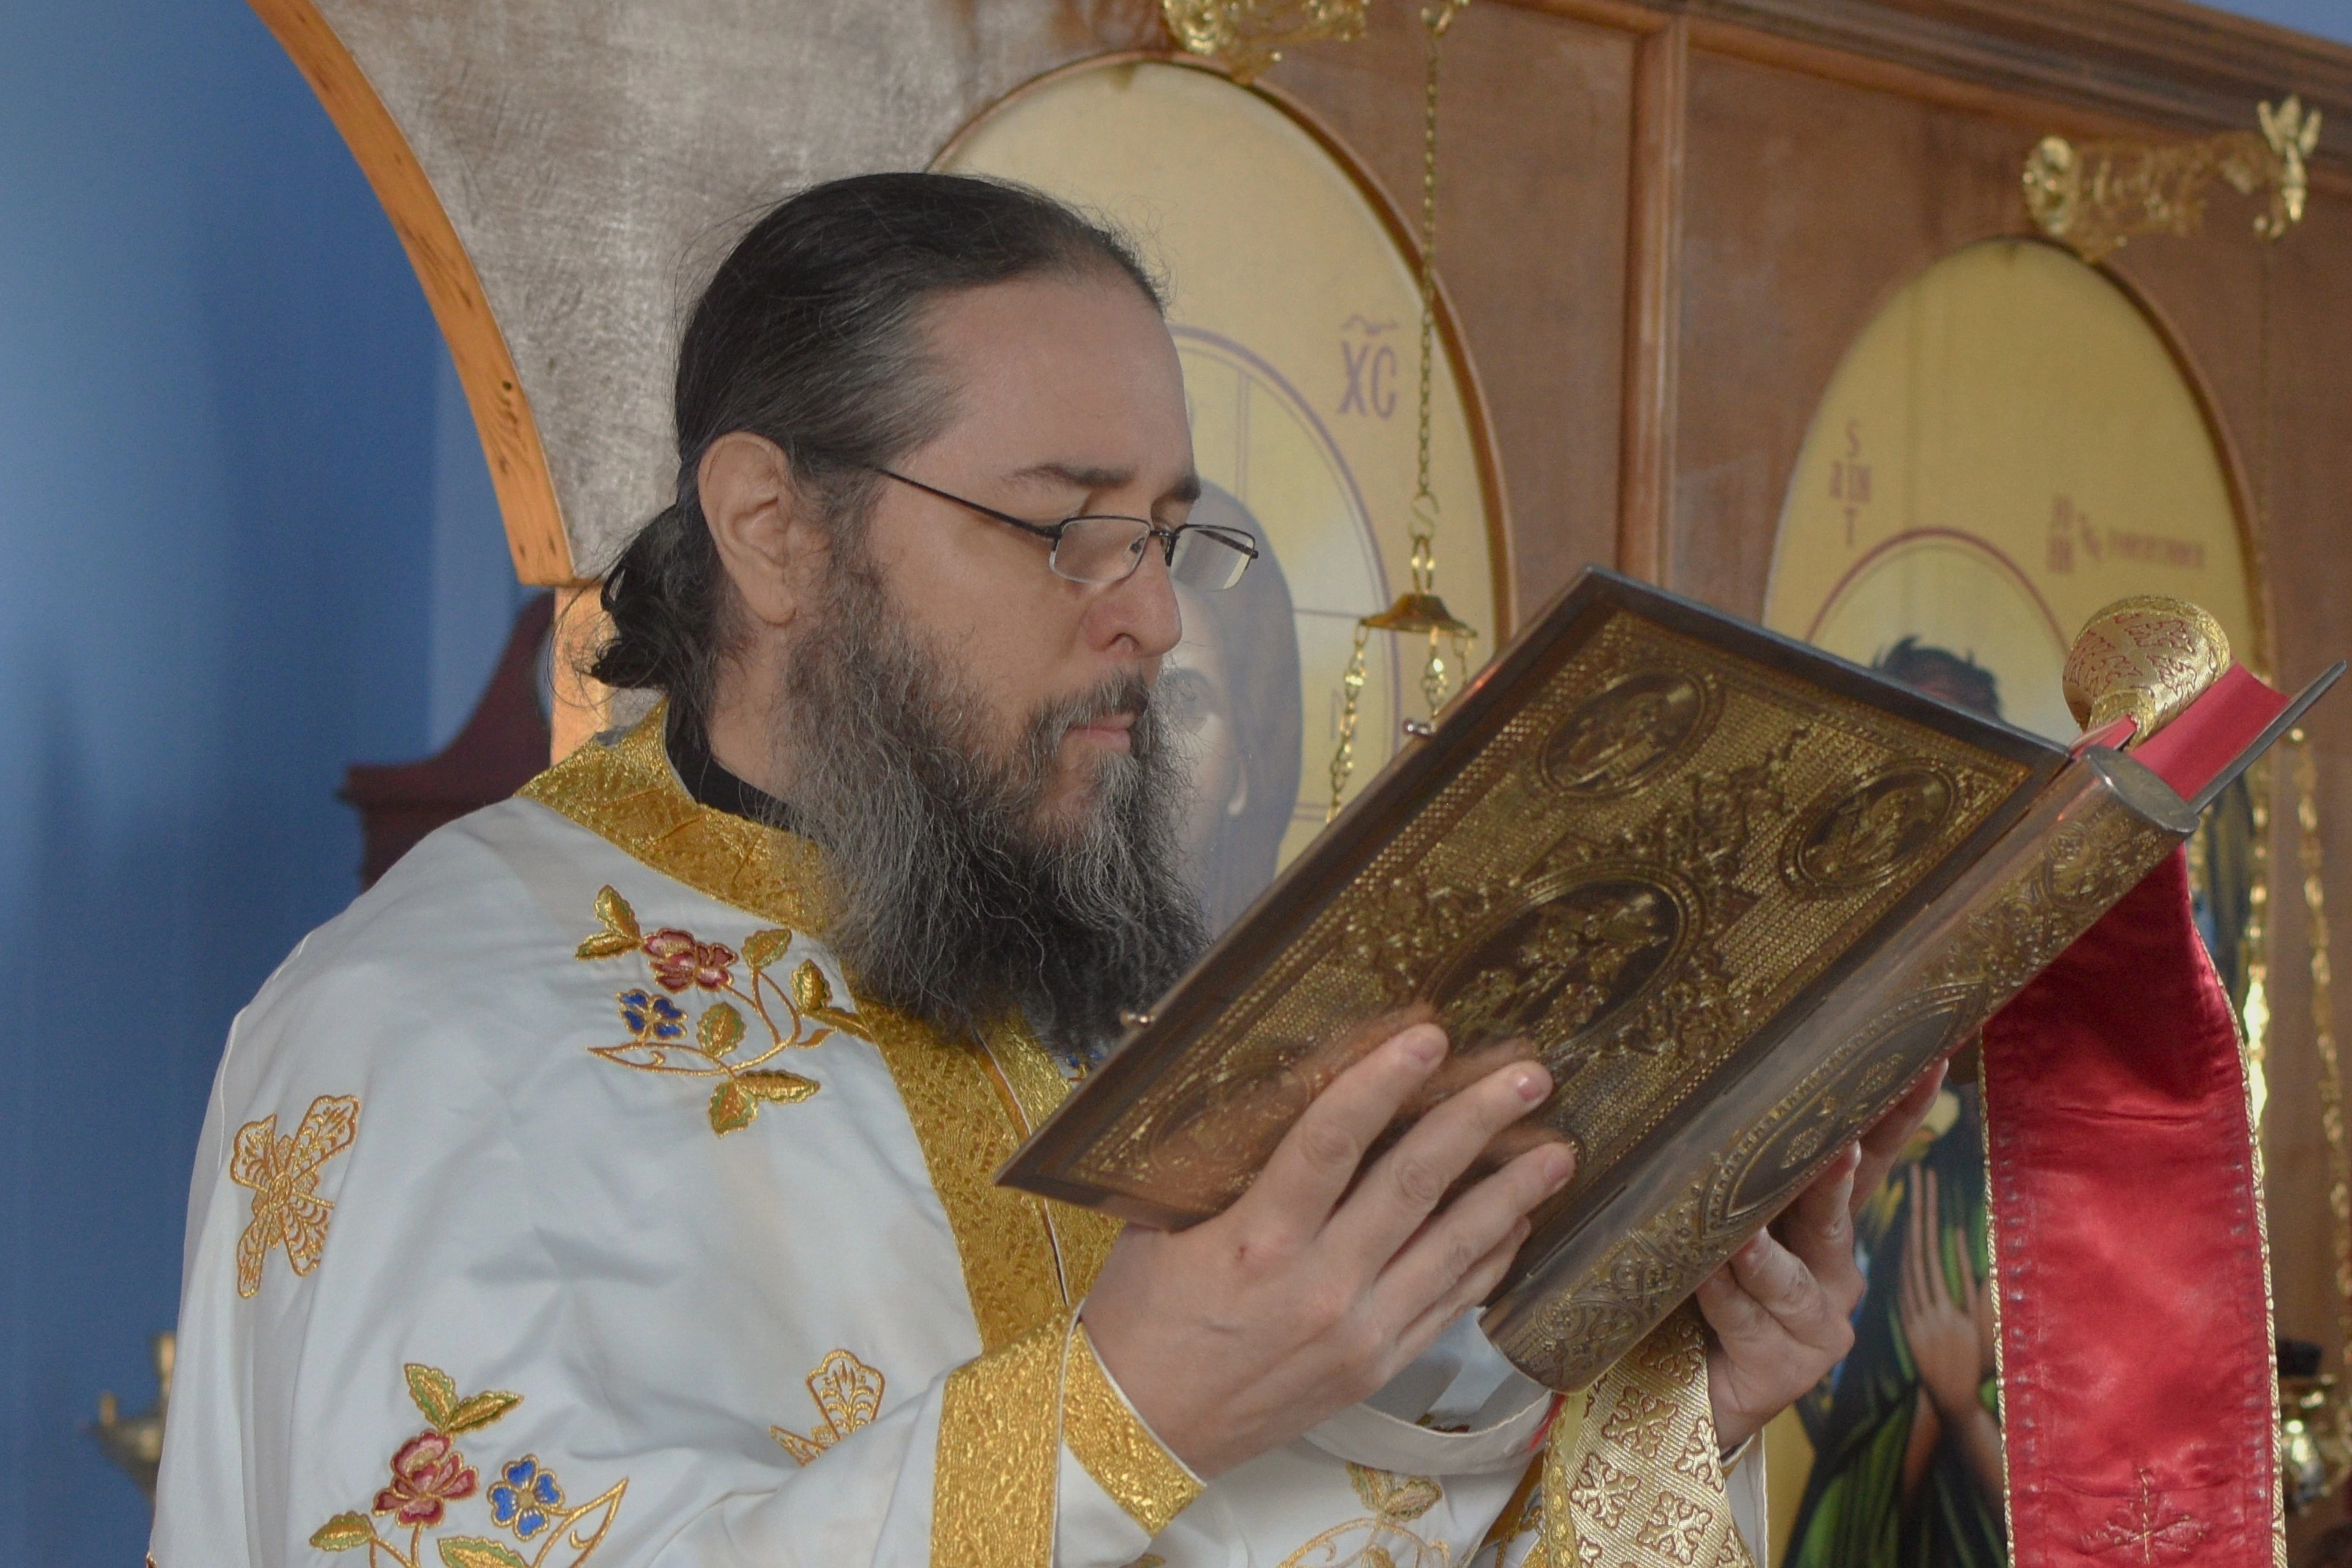 Father John reading the Gospels